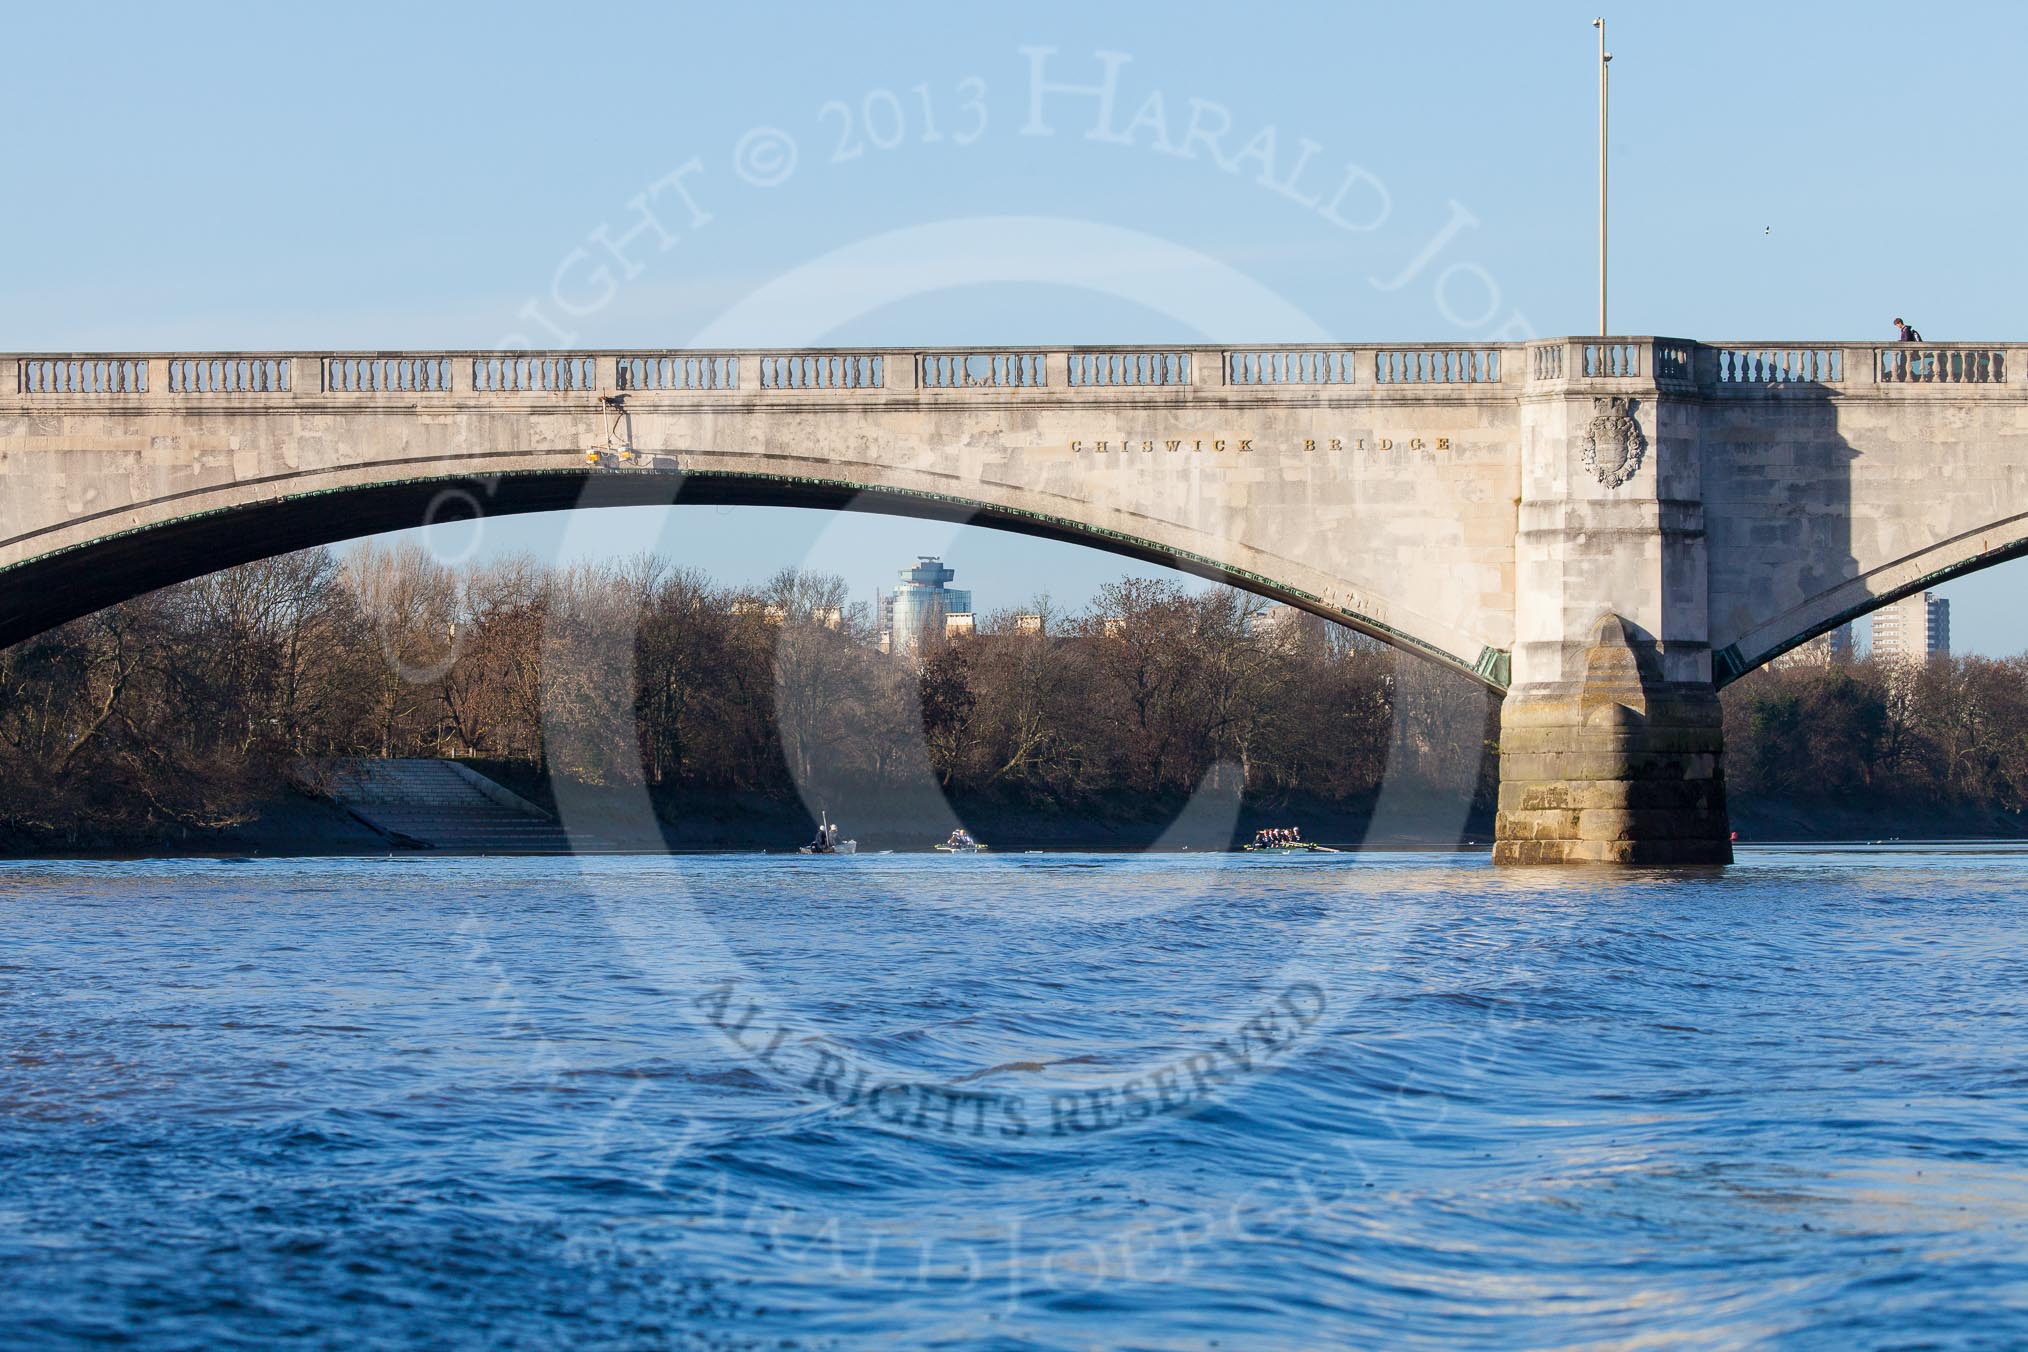 The Boat Race season 2014 - Women's Trial VIIIs (OUWBC, Oxford): Boudicca vs Cleopatra..
River Thames between Putney Bridge and Mortlake,
London SW15,

United Kingdom,
on 19 December 2013 at 13:06, image #255